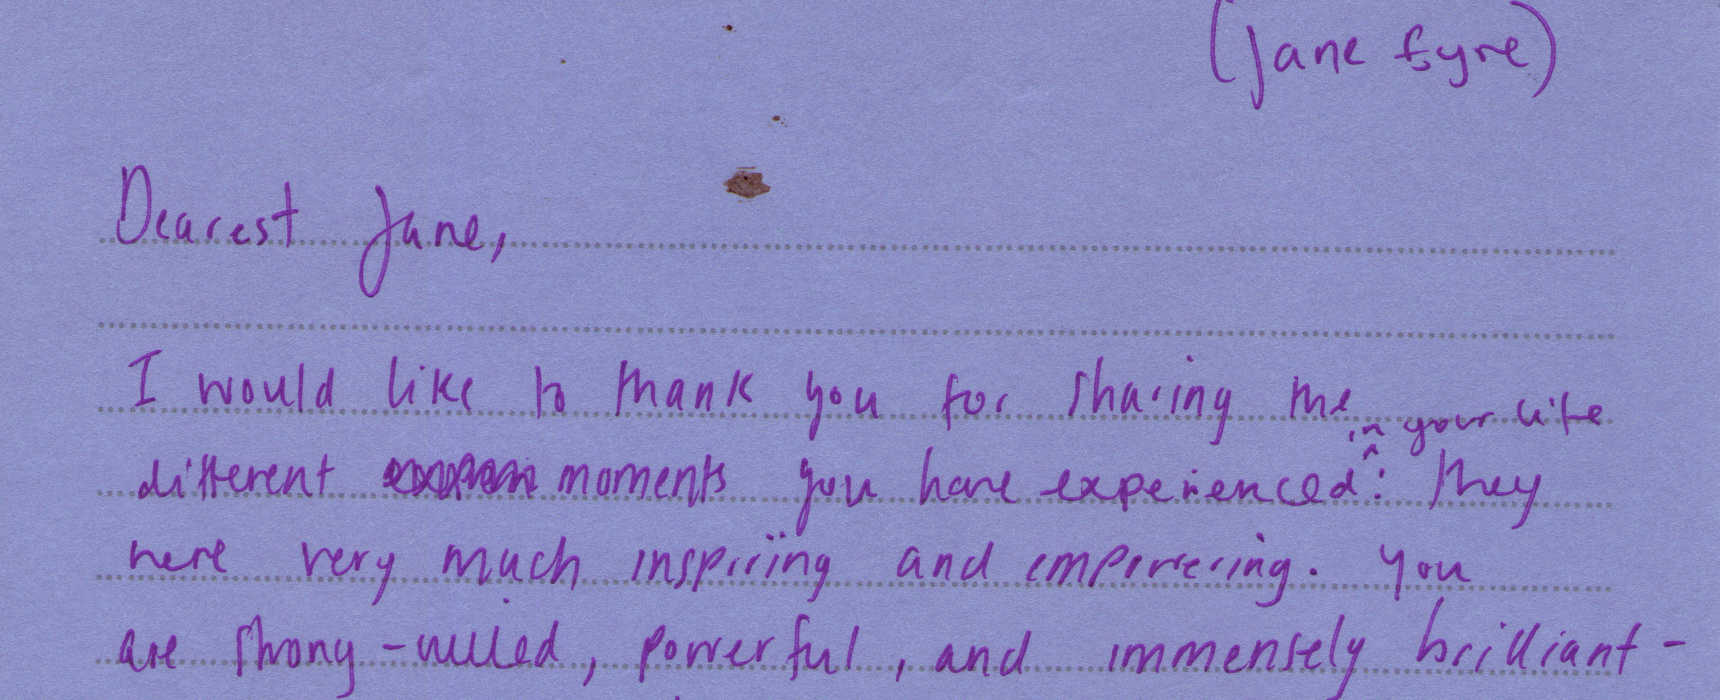 Letter to Jane Eyre from Khadiza Bibi